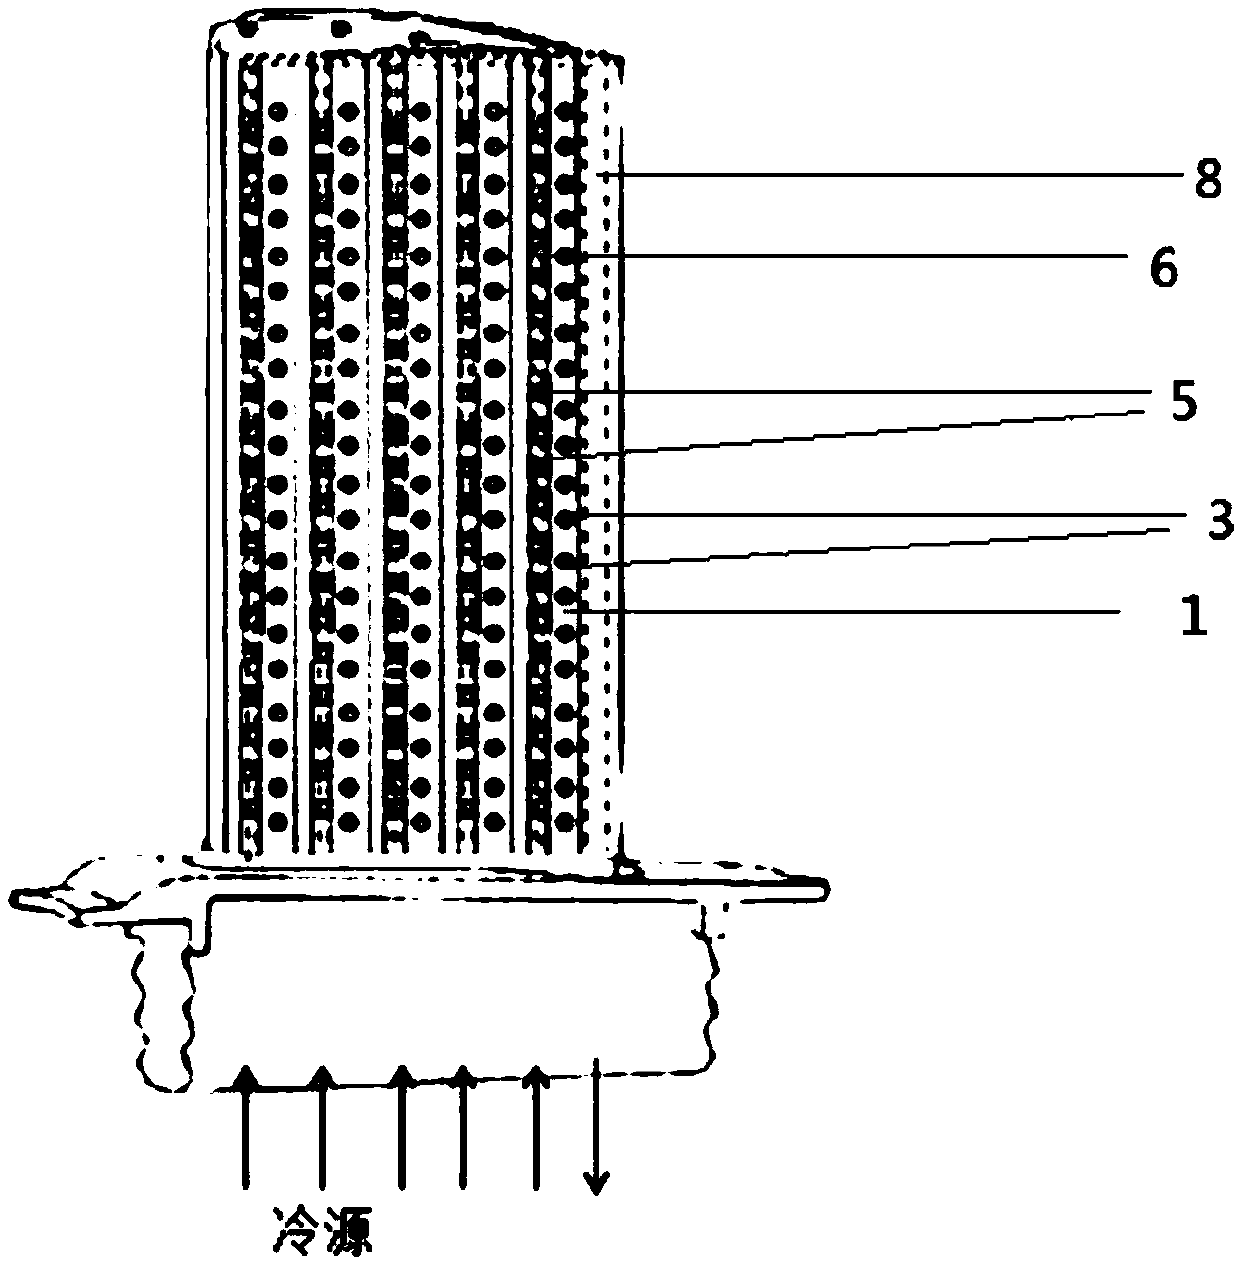 A gas-liquid coupling turbine blade cooling unit